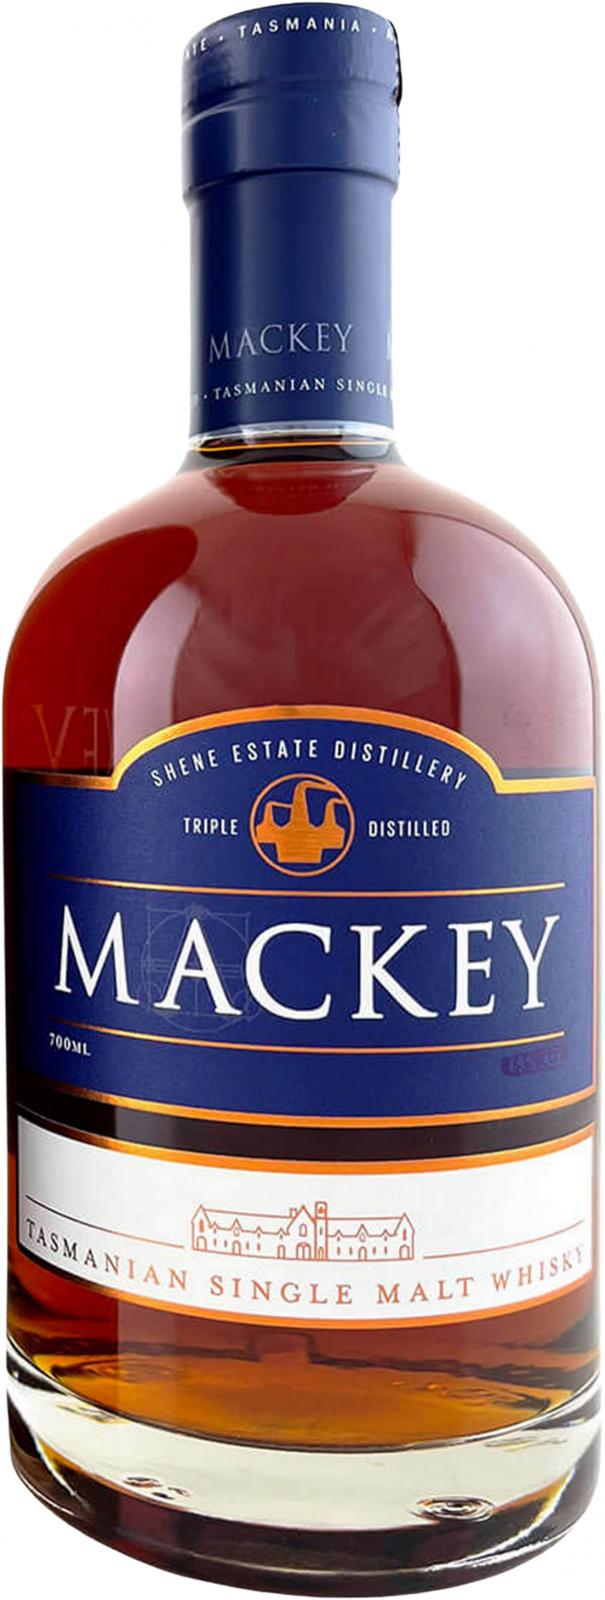 Mackey Tasmanian Single Malt Whisky Cask Strength Apera 144 63.3% 700ml